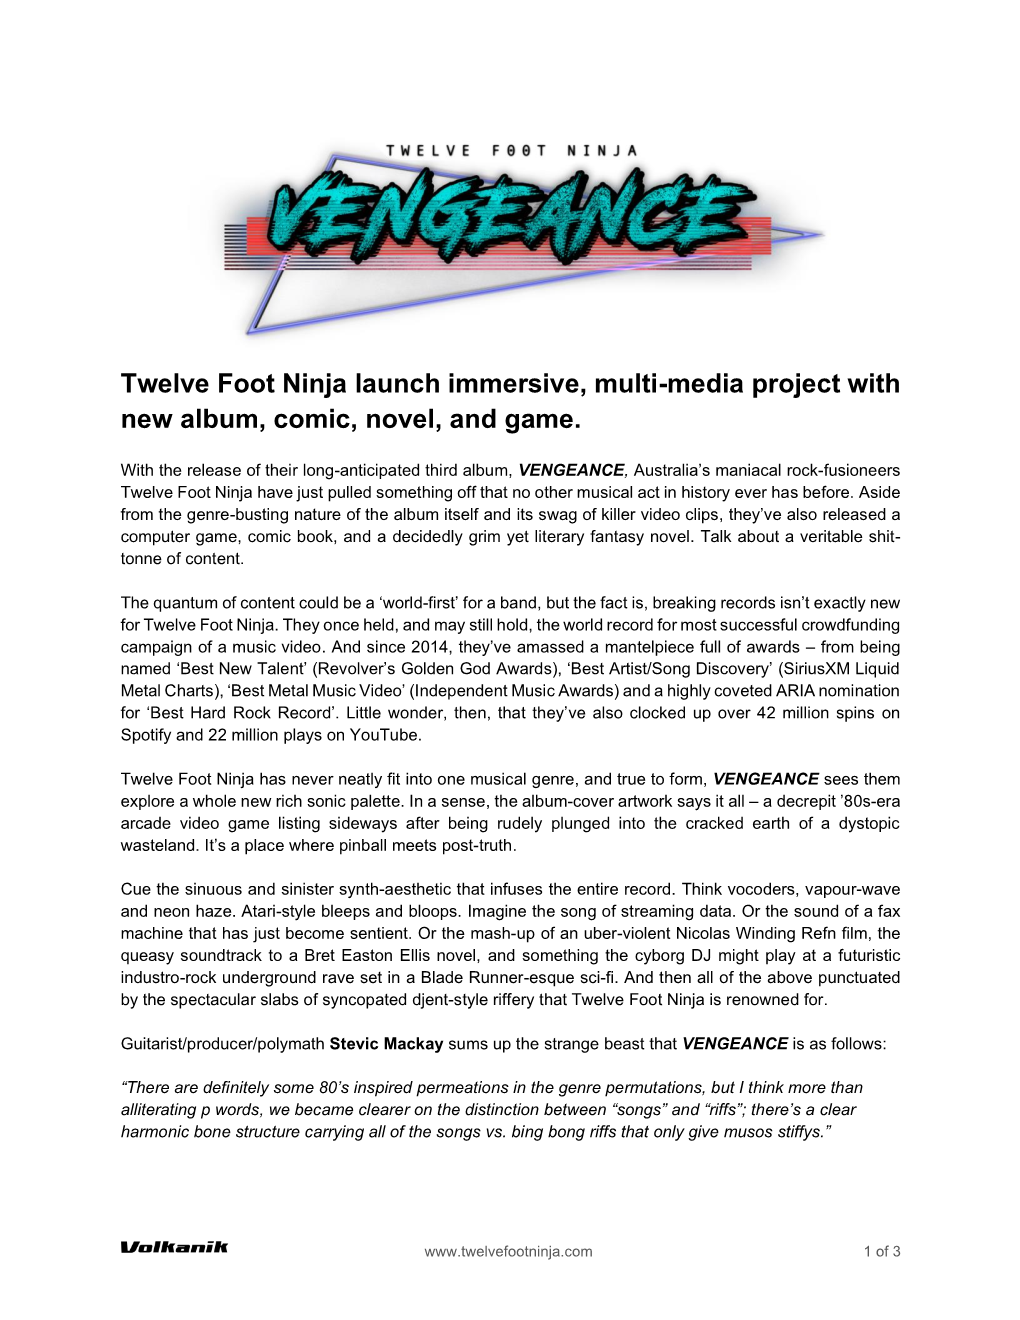 Twelve Foot Ninja Launch Immersive, Multi-Media Project with New Album, Comic, Novel, and Game